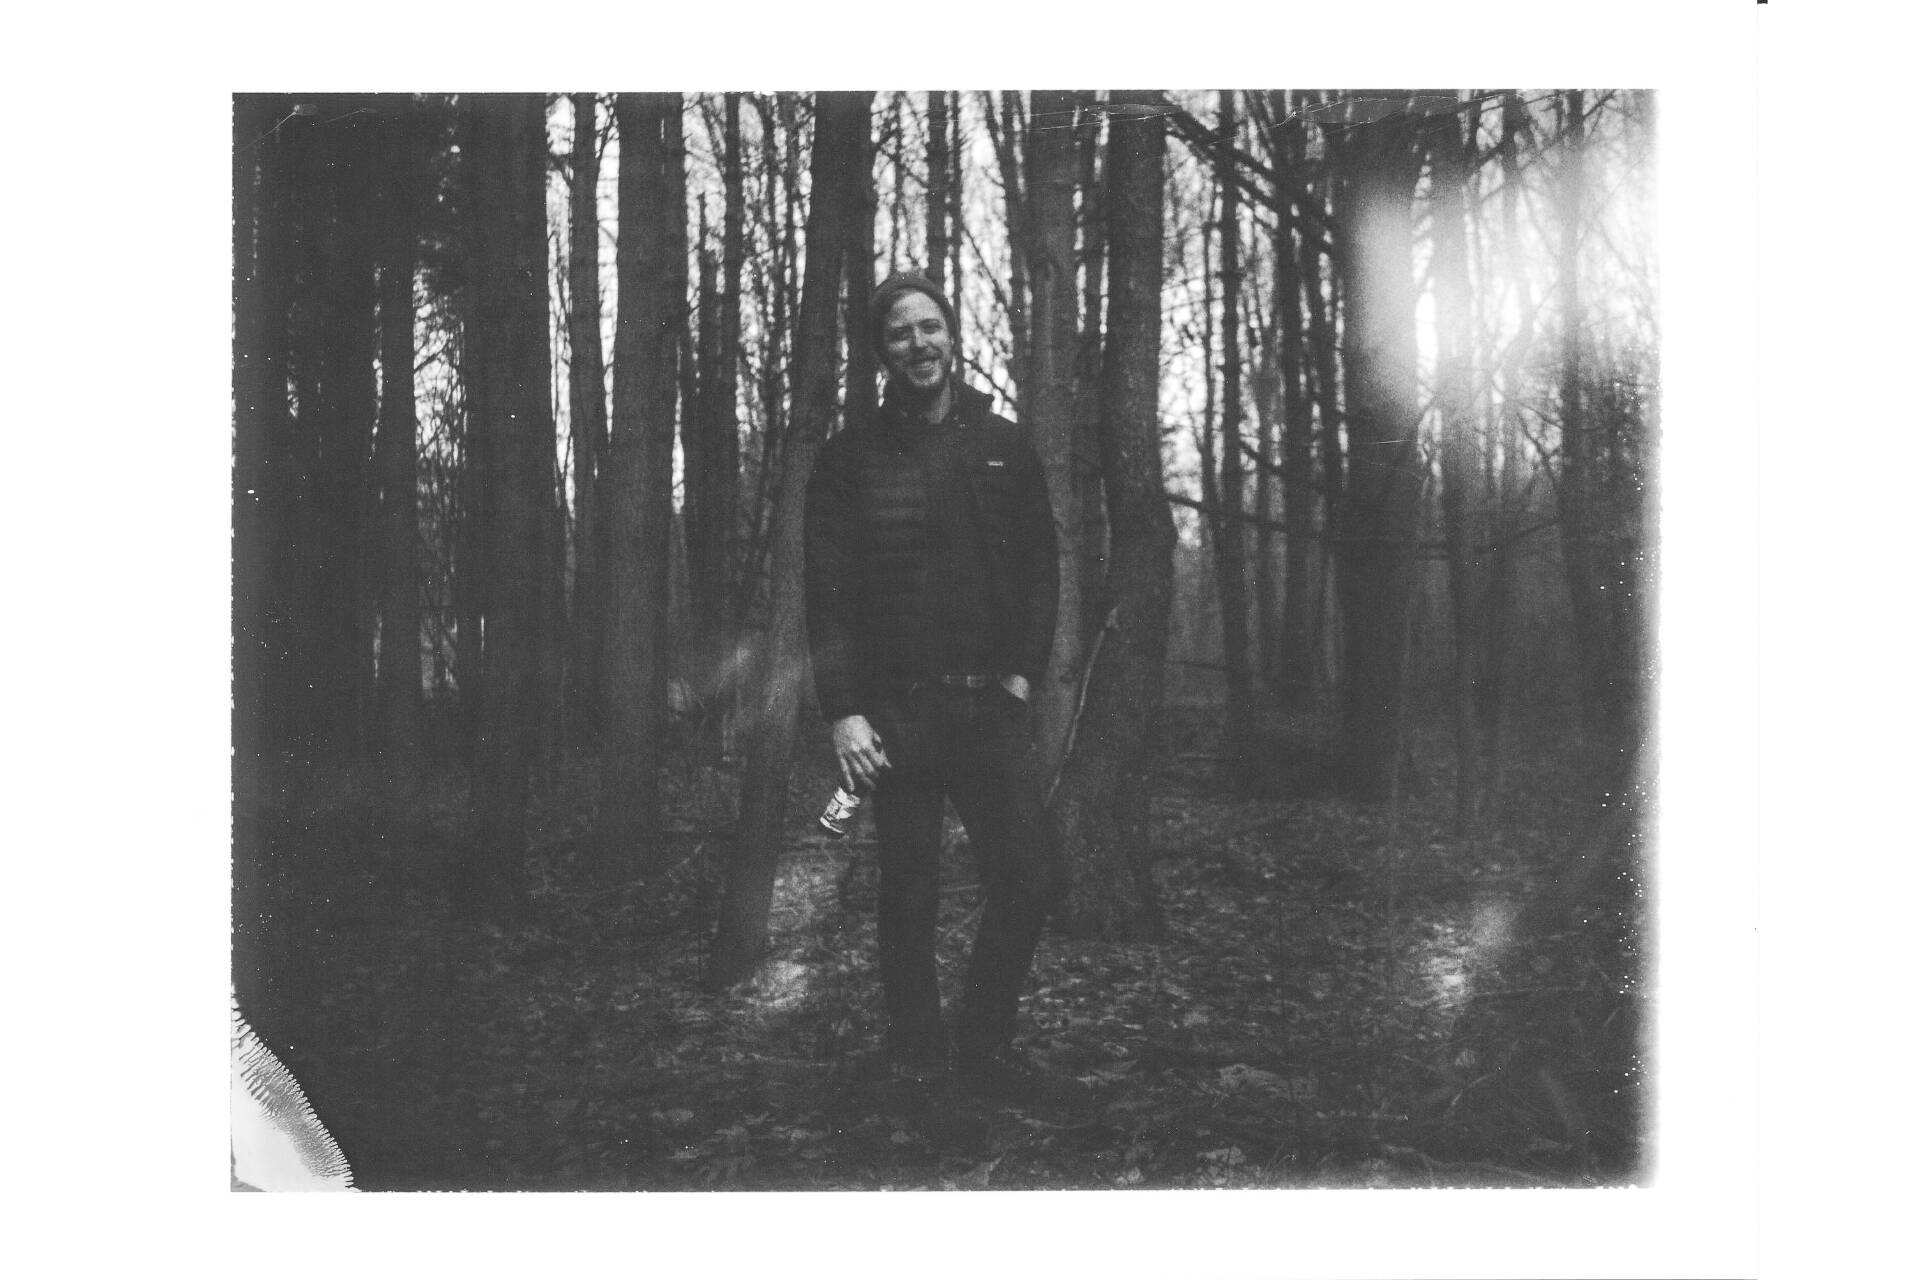 Josh Stunkel double exposure portrait shot on FB-3000b film